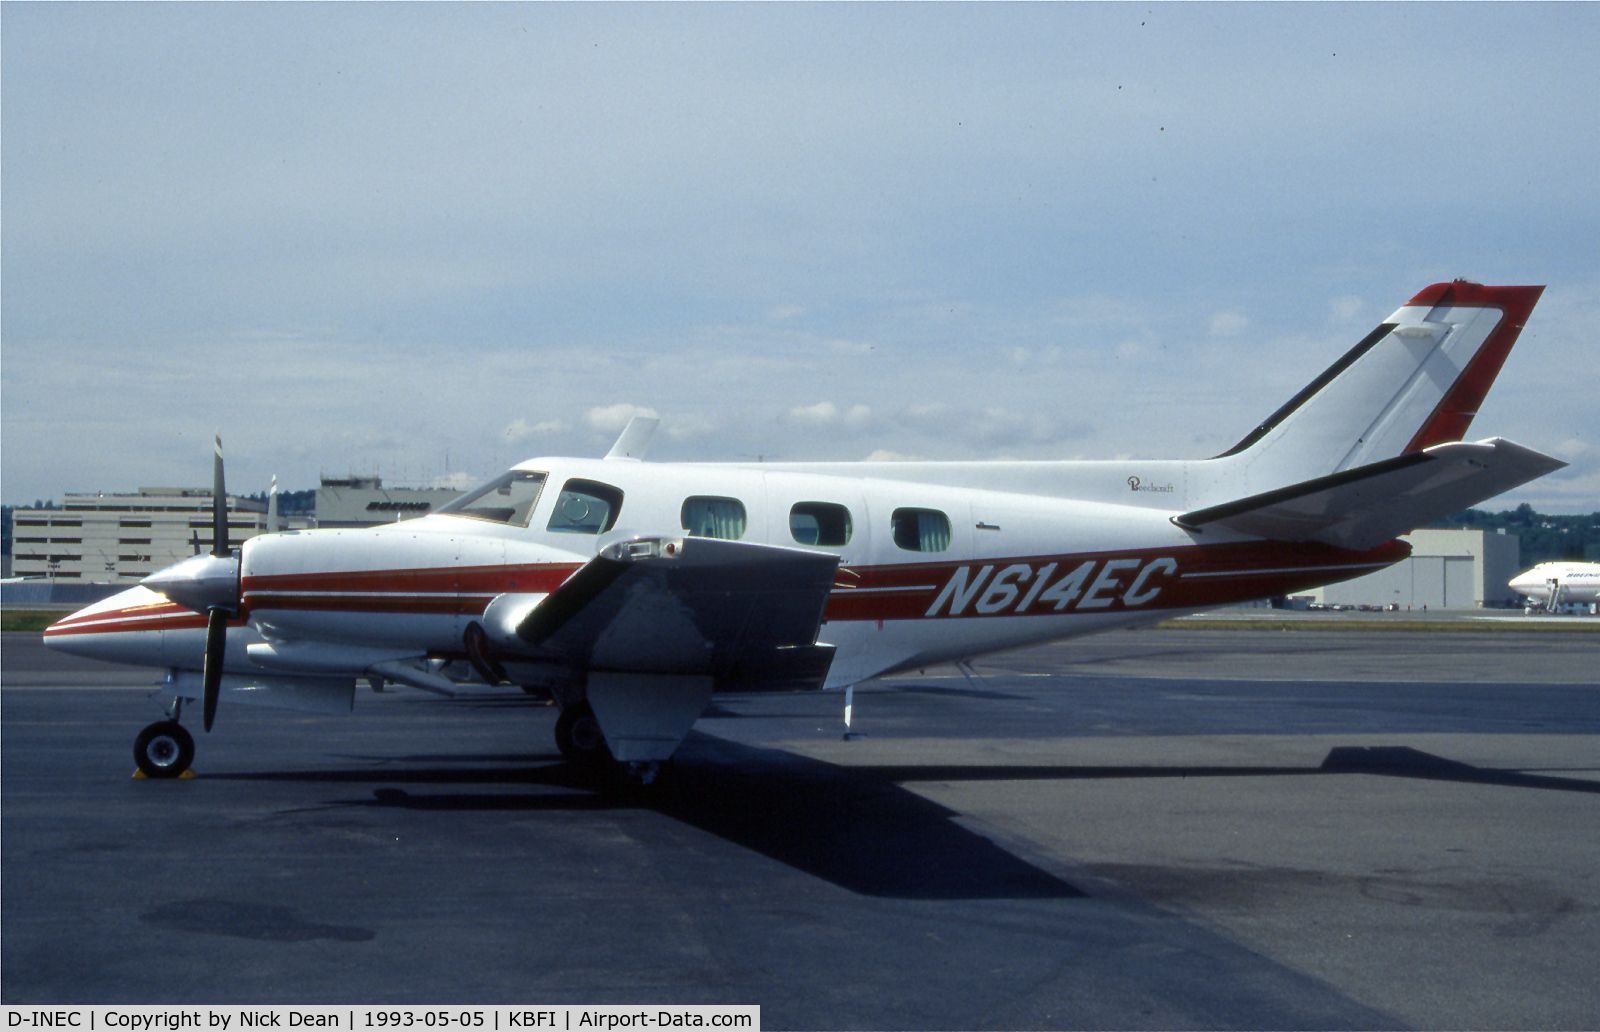 D-INEC, 1981 Beech B-60 Duke C/N P-549, C/N P-549 currently registered D-INEC